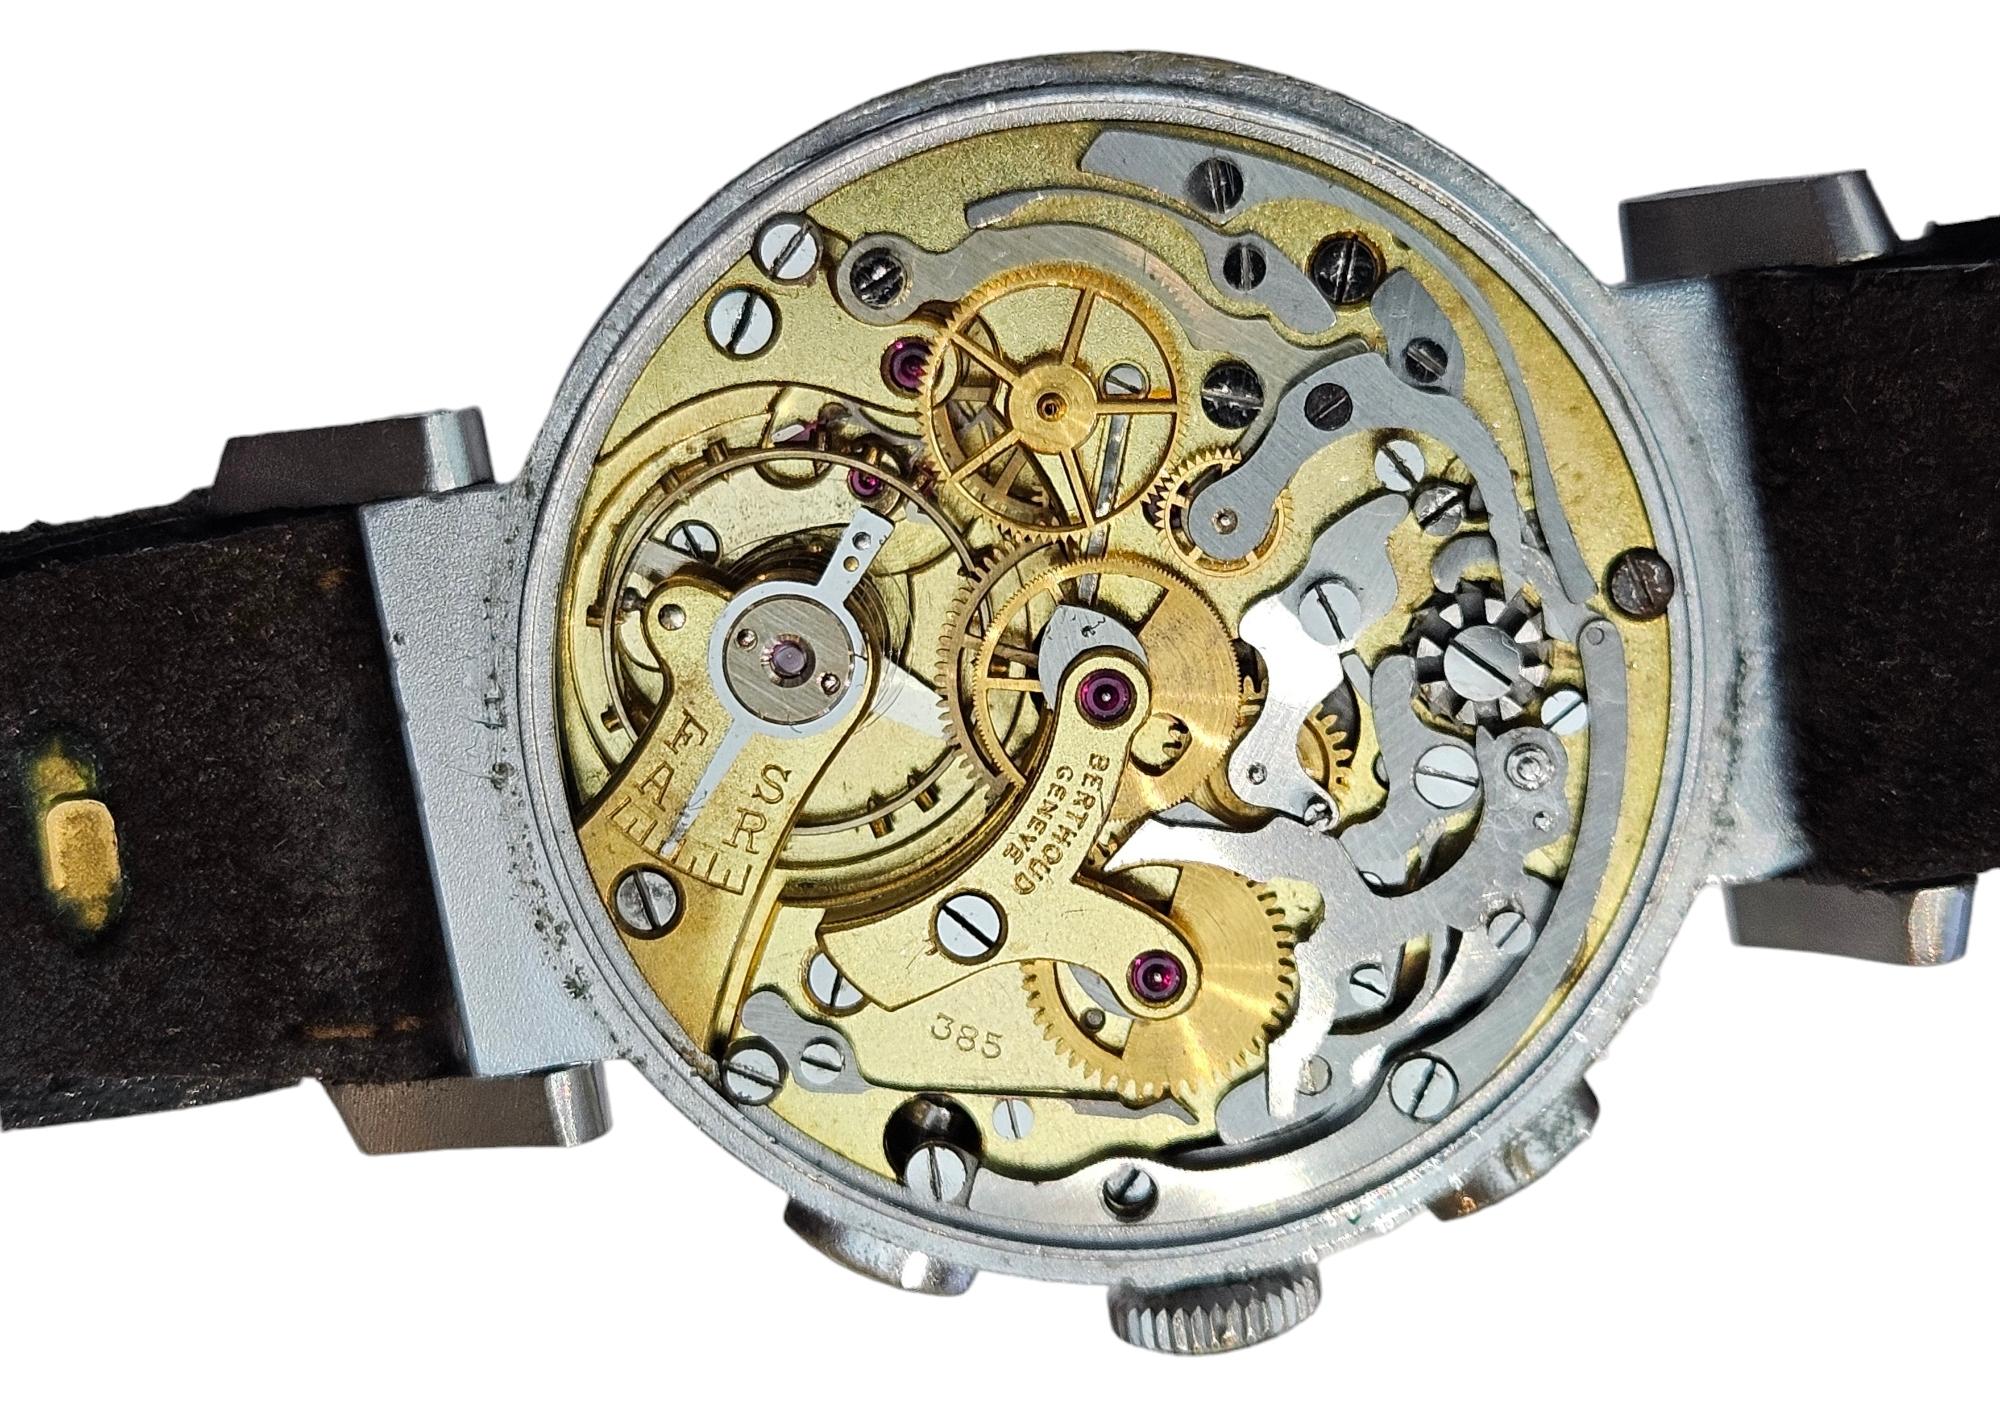 Berthoud / Universal Genève Uni Compax Chronograph Wrist Watch, Rare Collectors For Sale 6